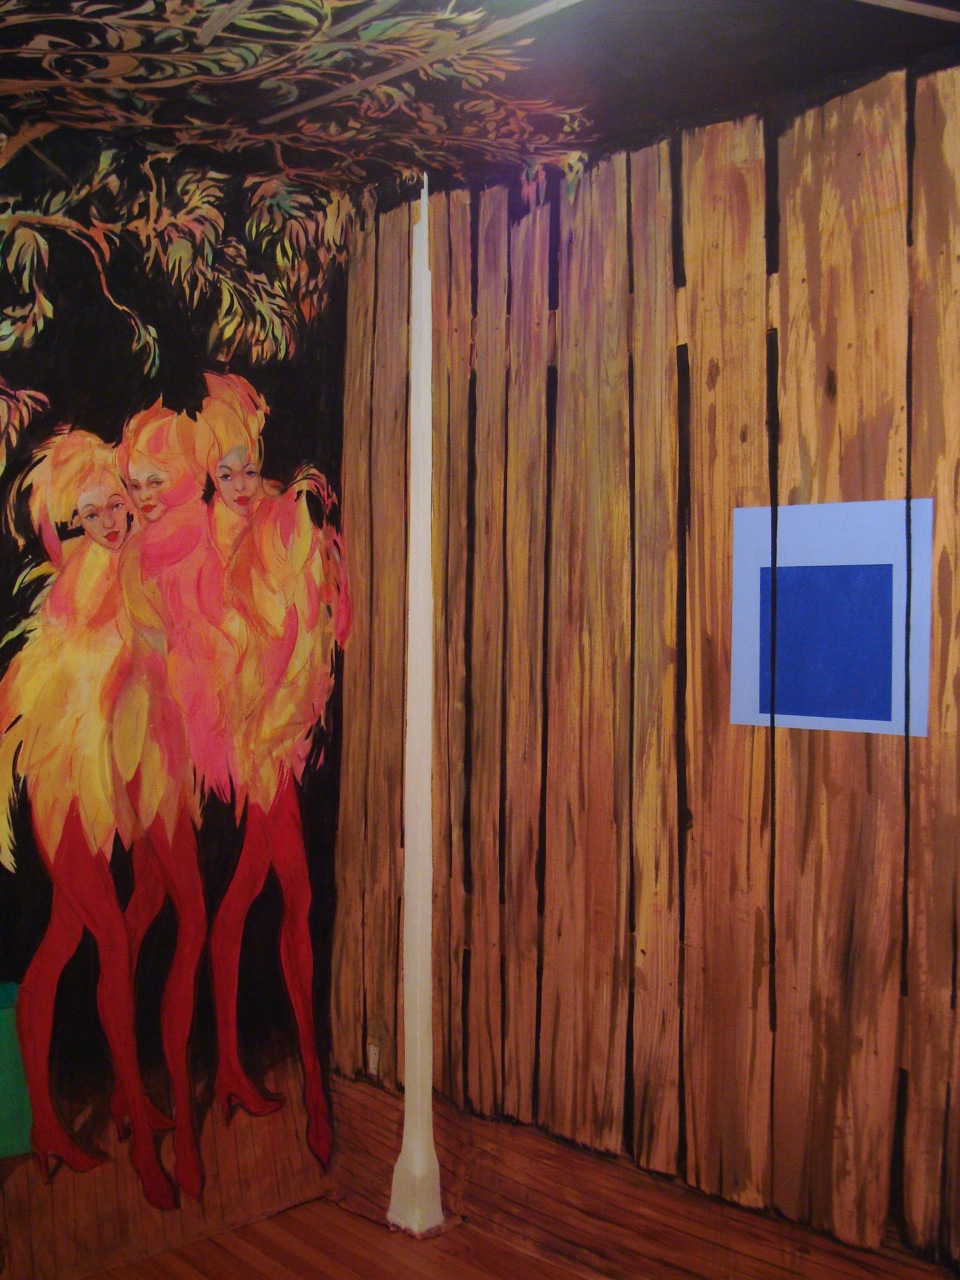 Kai Teichert, "Hudson Room," Installation at LKC, Hudson, NY, 2013